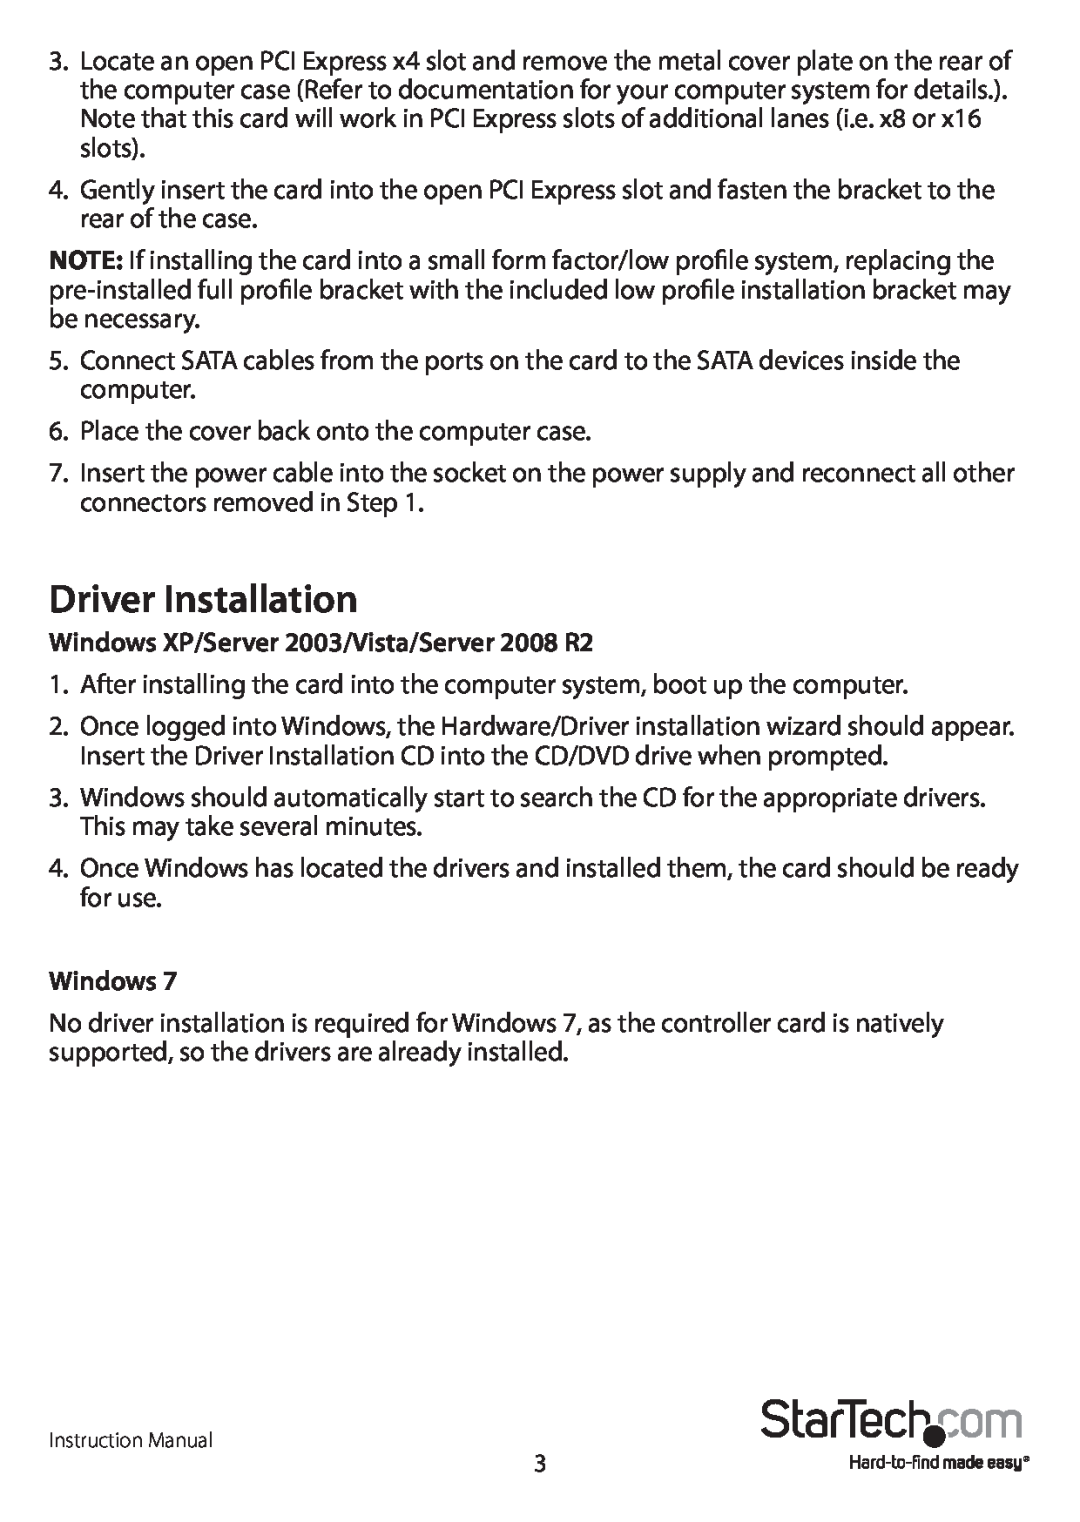 StarTech.com PEXSAT34 manual Driver Installation, Windows XP/Server 2003/Vista/Server 2008 R2 